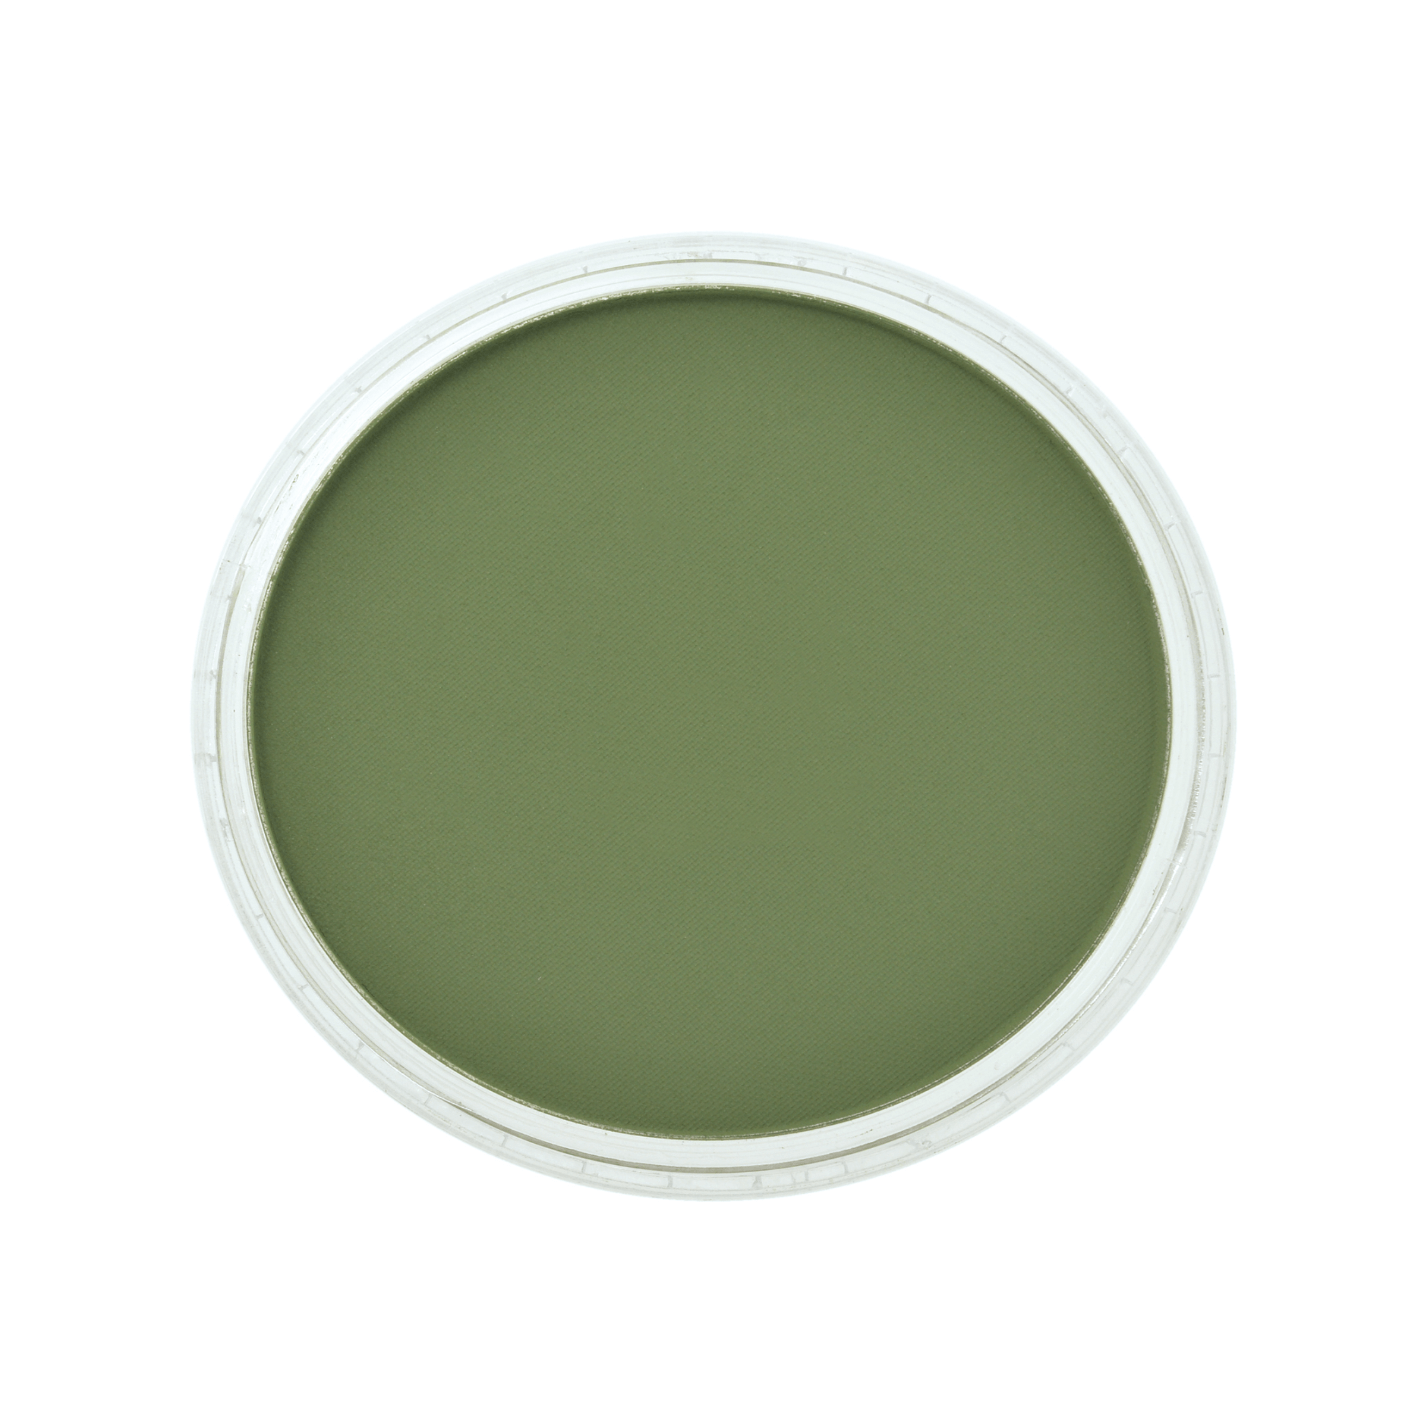 Panpastel Tørpastel 9ml Chromium Oxide Green Shade 660.3